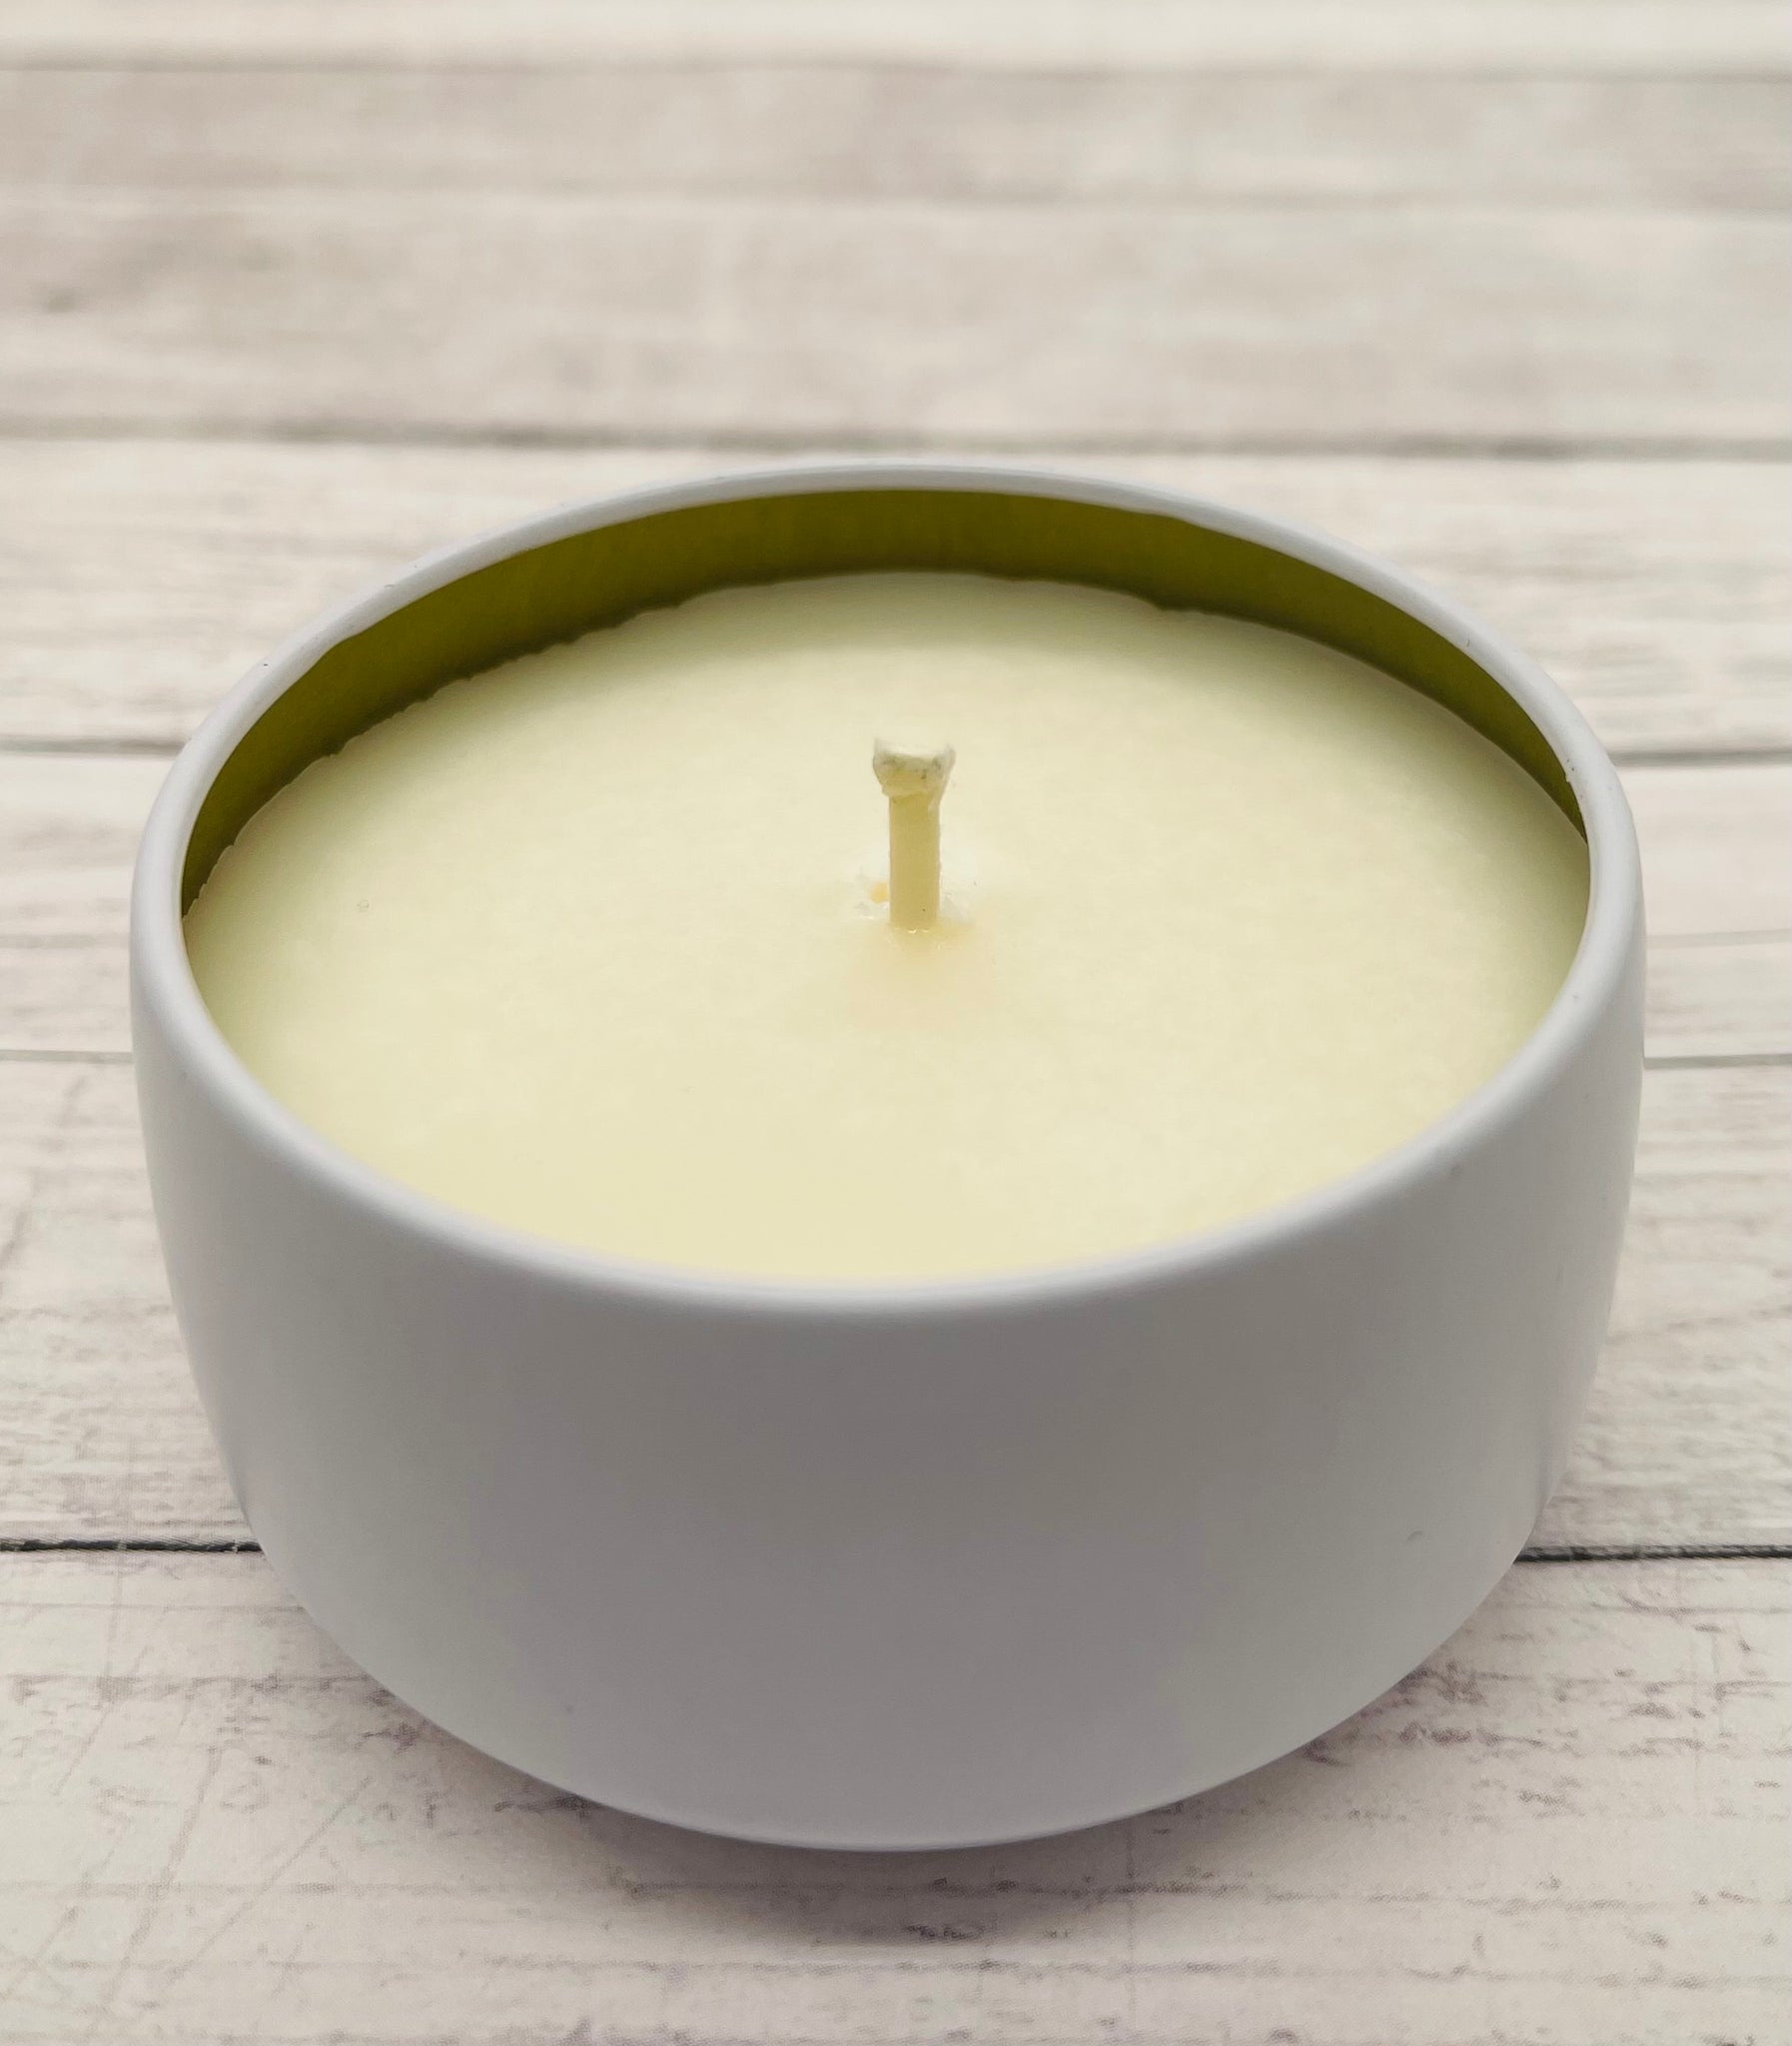 4 oz Spark Tin Scented Soy Candle - WHITE TEA – HHPLIFT